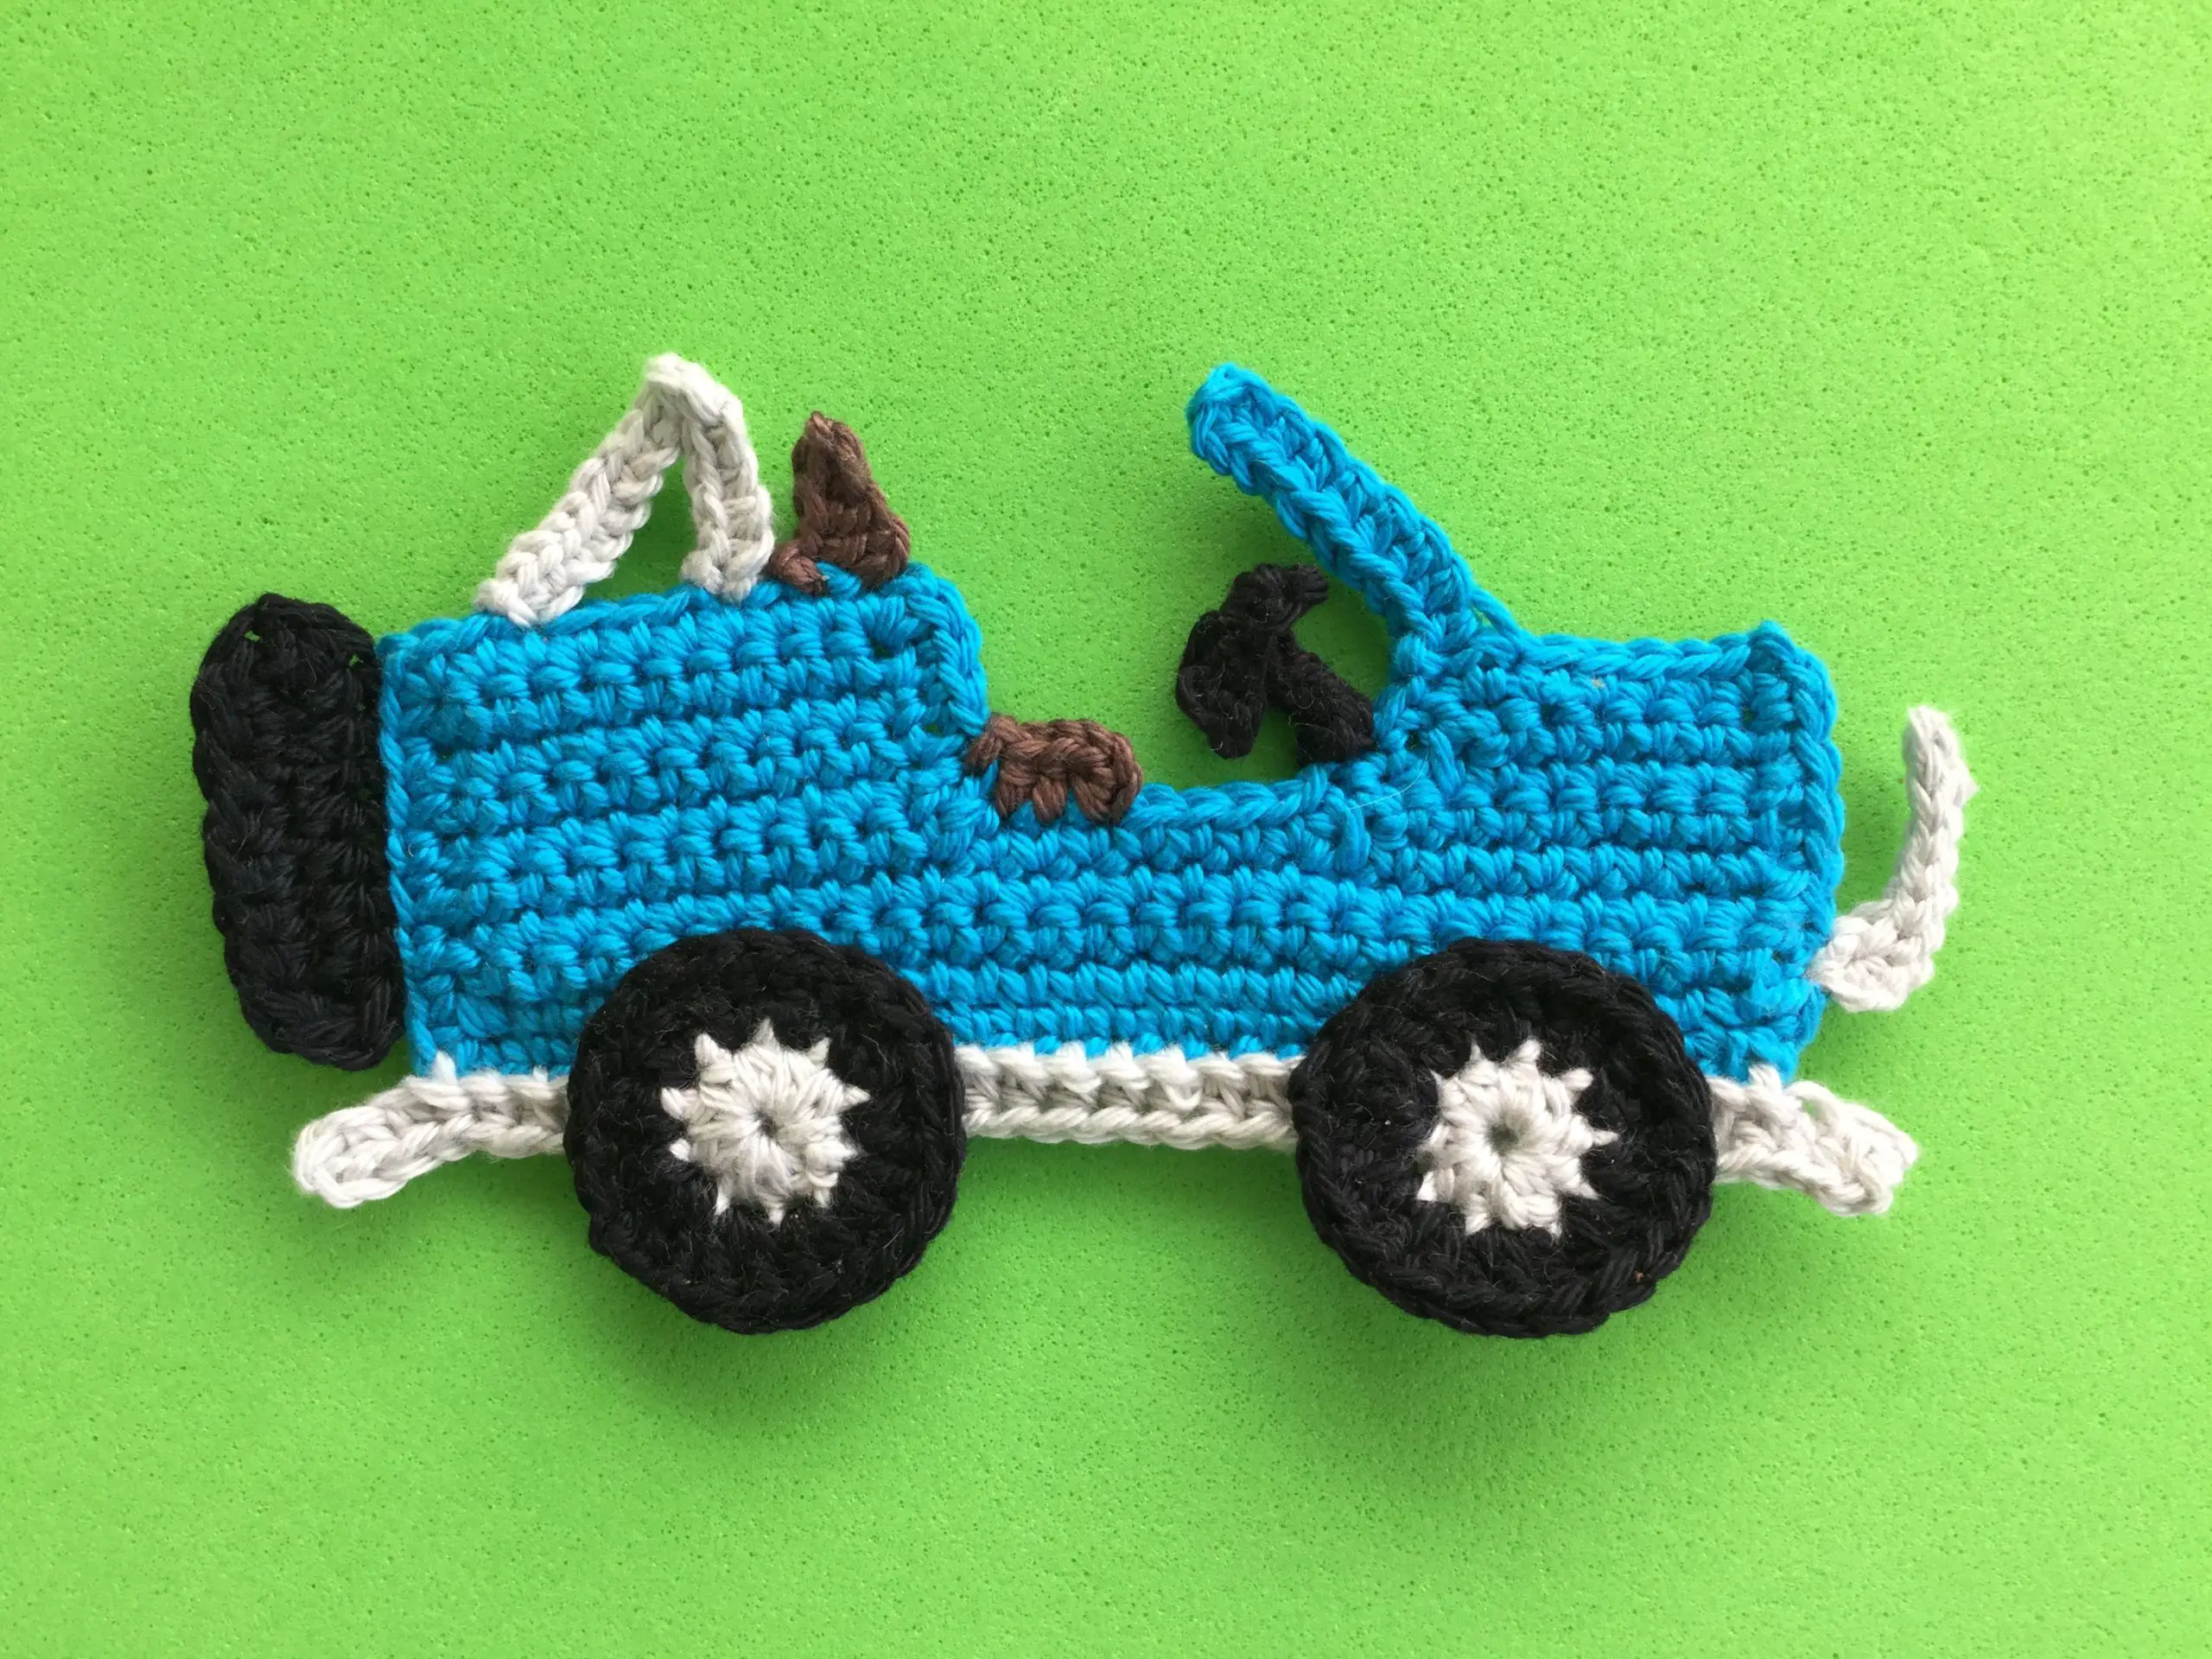 Finished crochet jeep tutorial 4 ply landscape